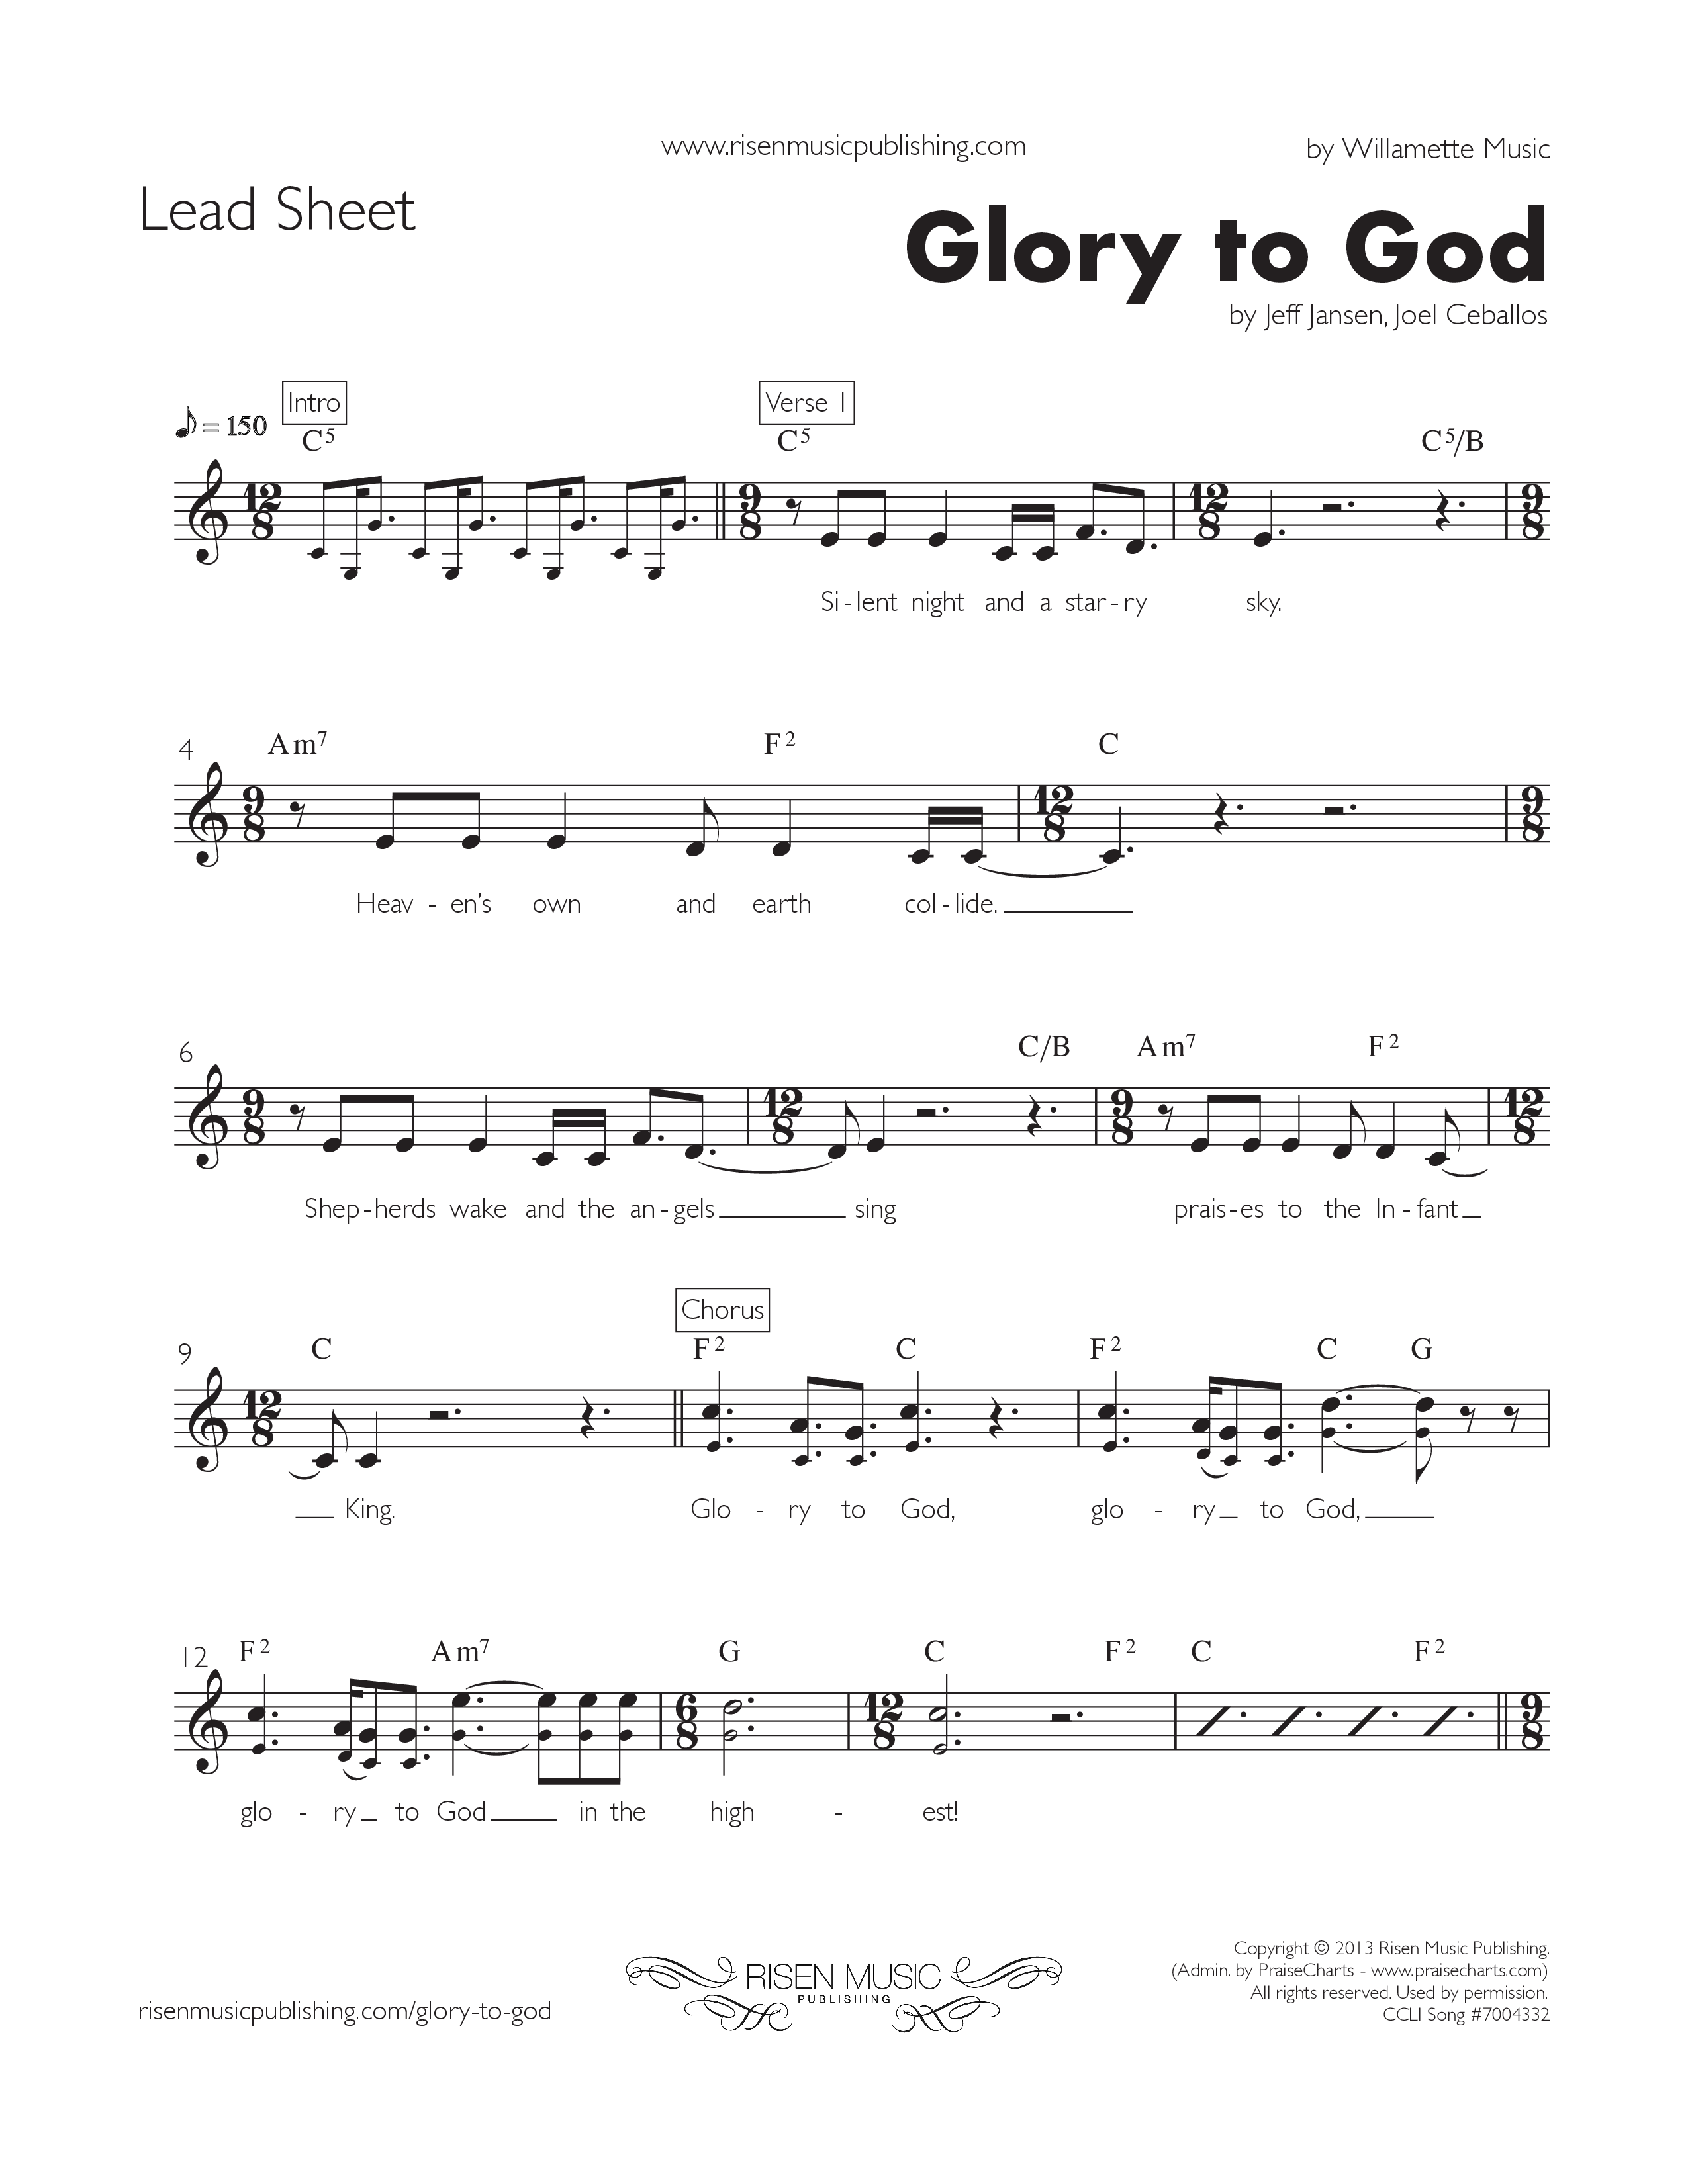 Glory To God Lead Sheet (Willamette Music)